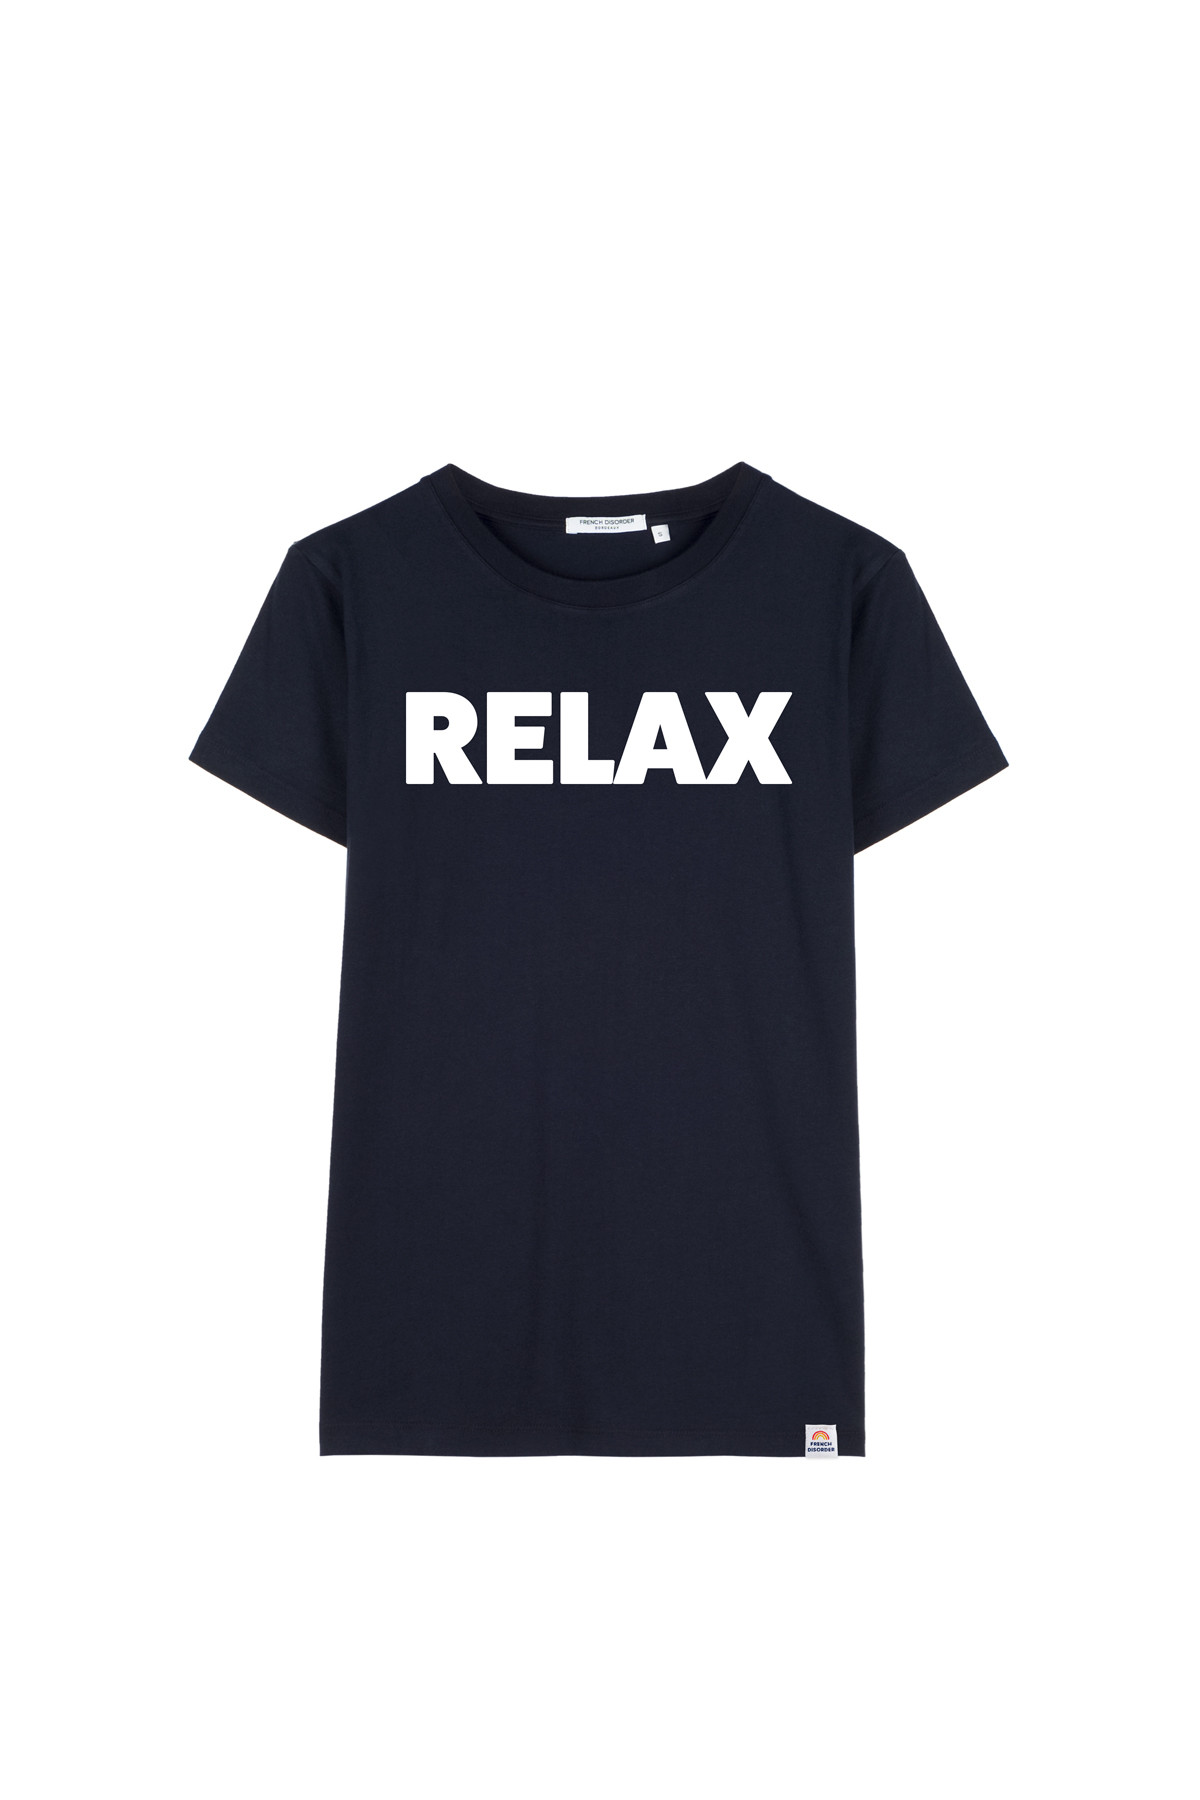 Tshirt RELAX French Disorder